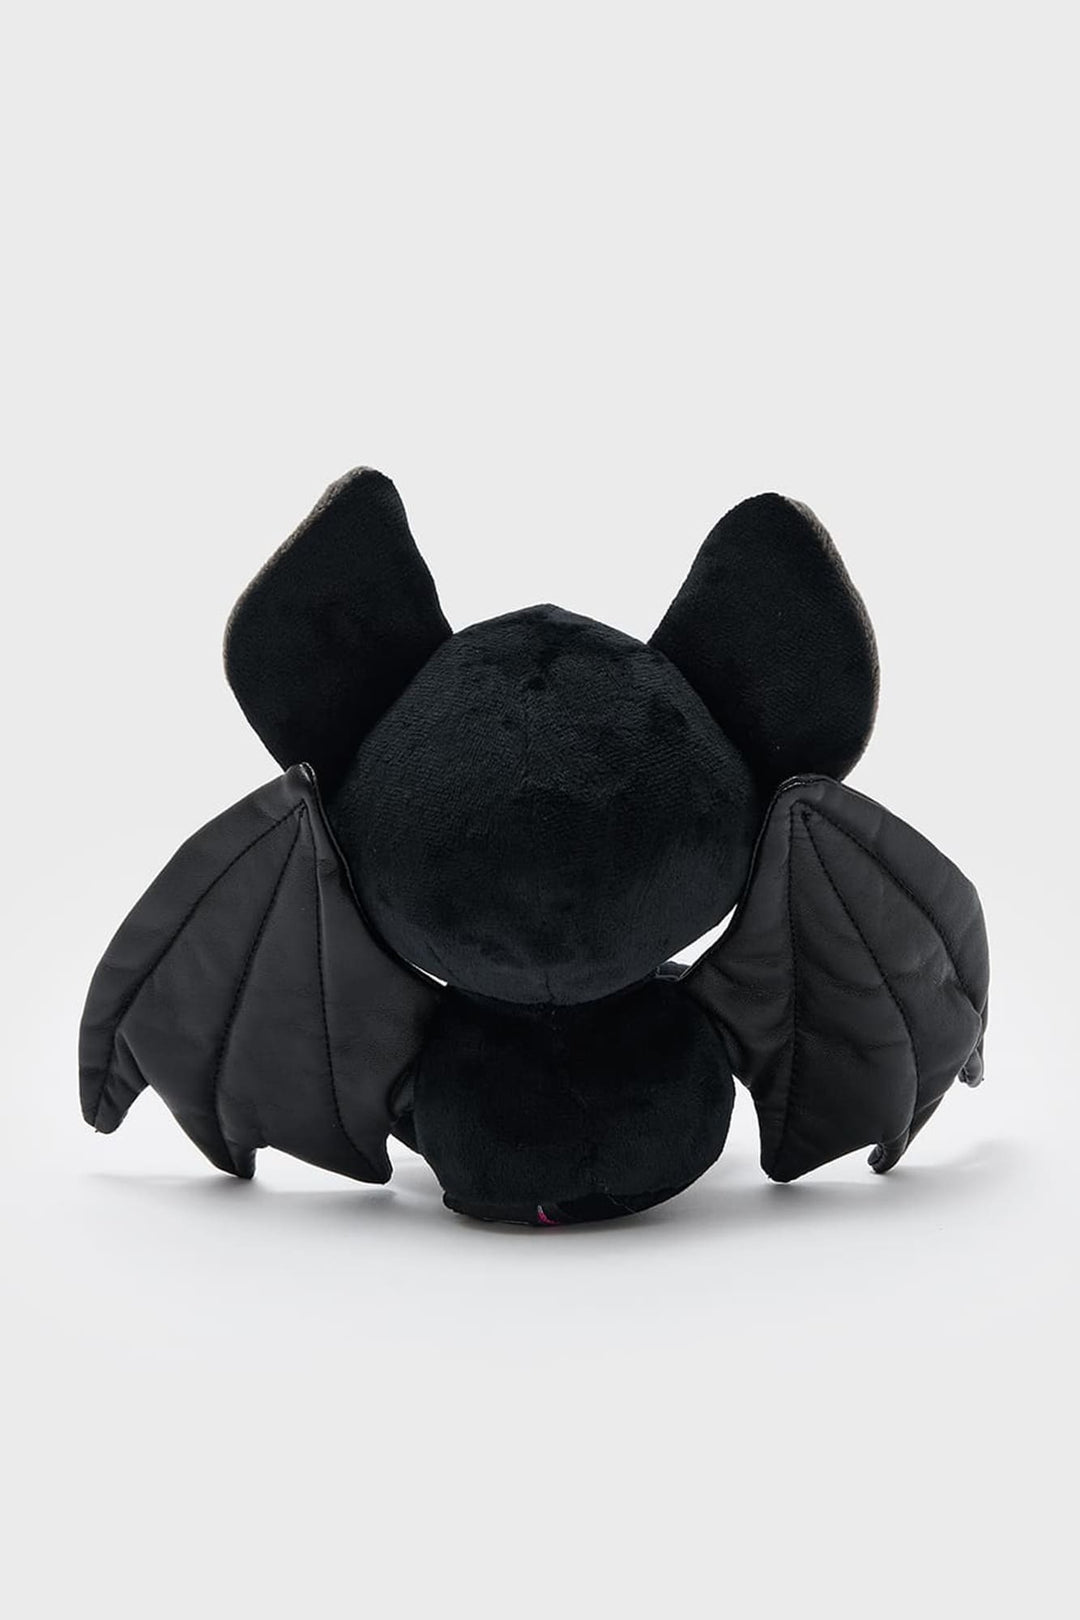 gothic bat stuffed animal that sticks to windows